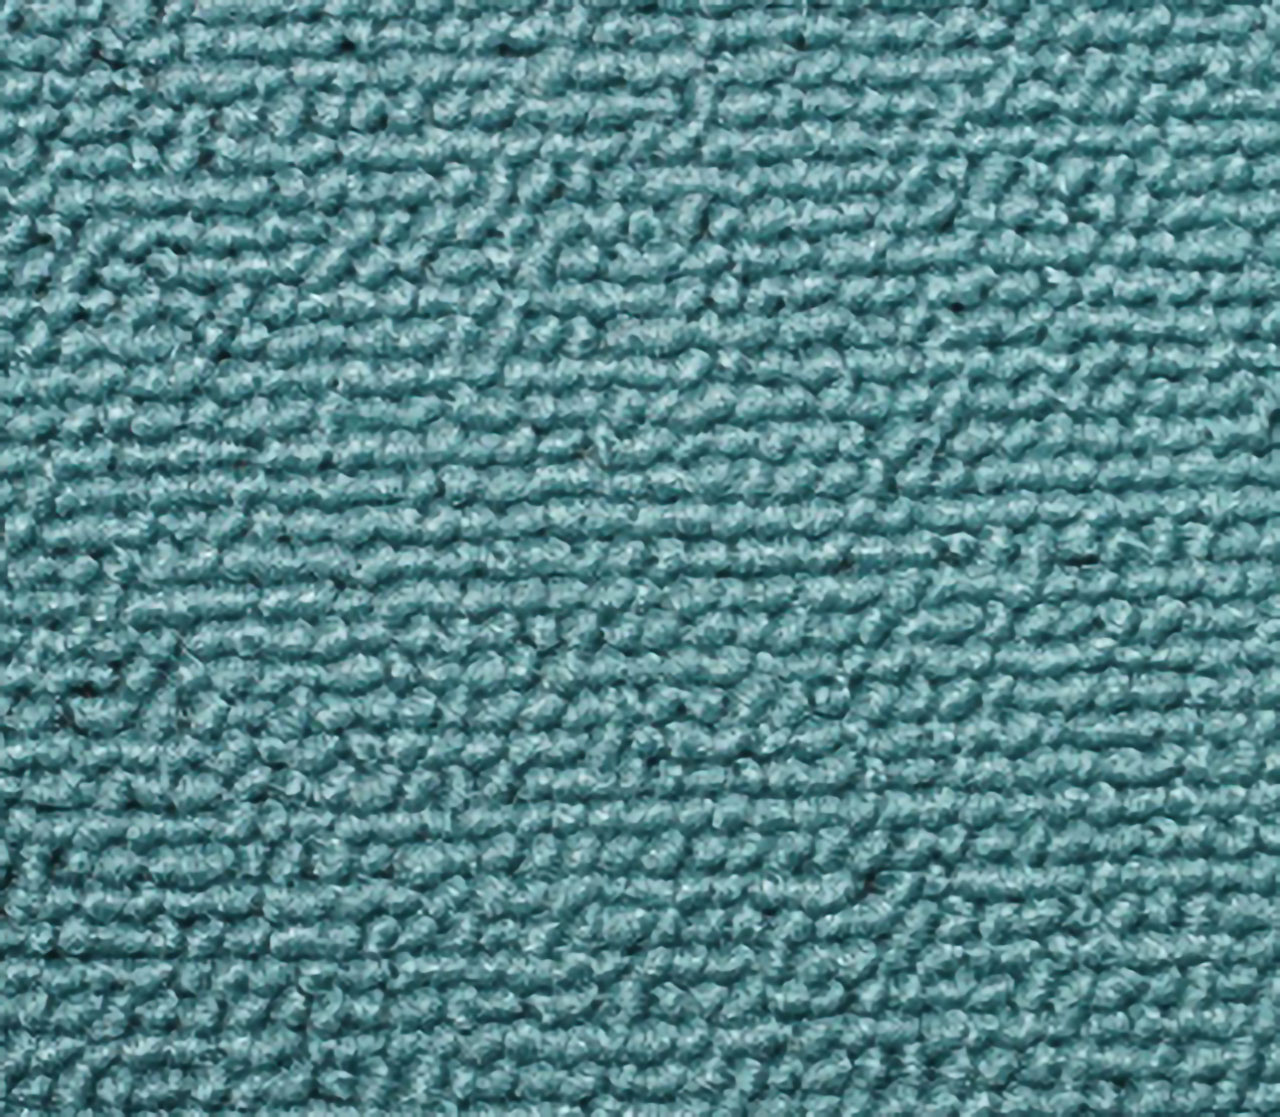 Holden Special EH Special Sedan C32 Gem & Tiara Turquoise Carpet (Image 1 of 1)